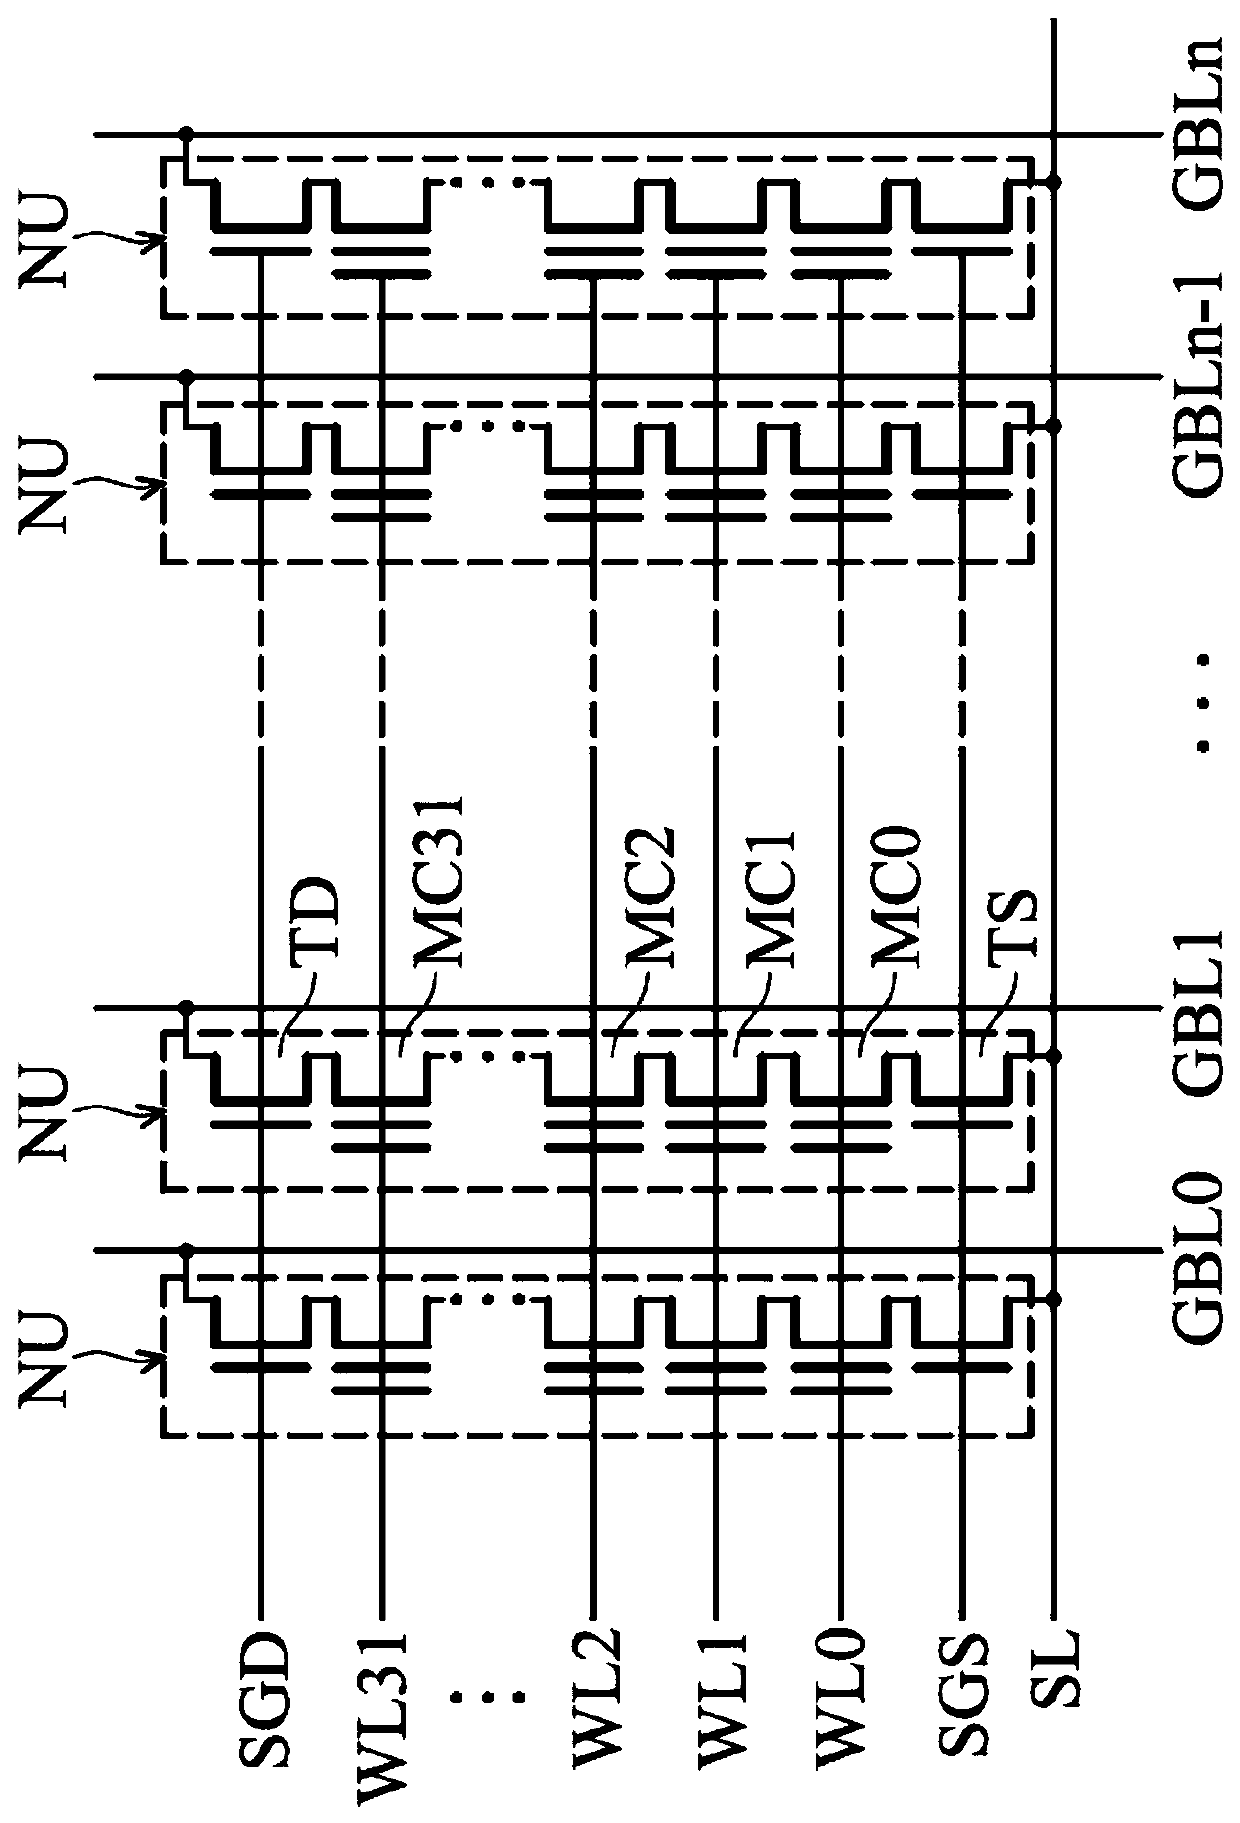 semiconductor storage device